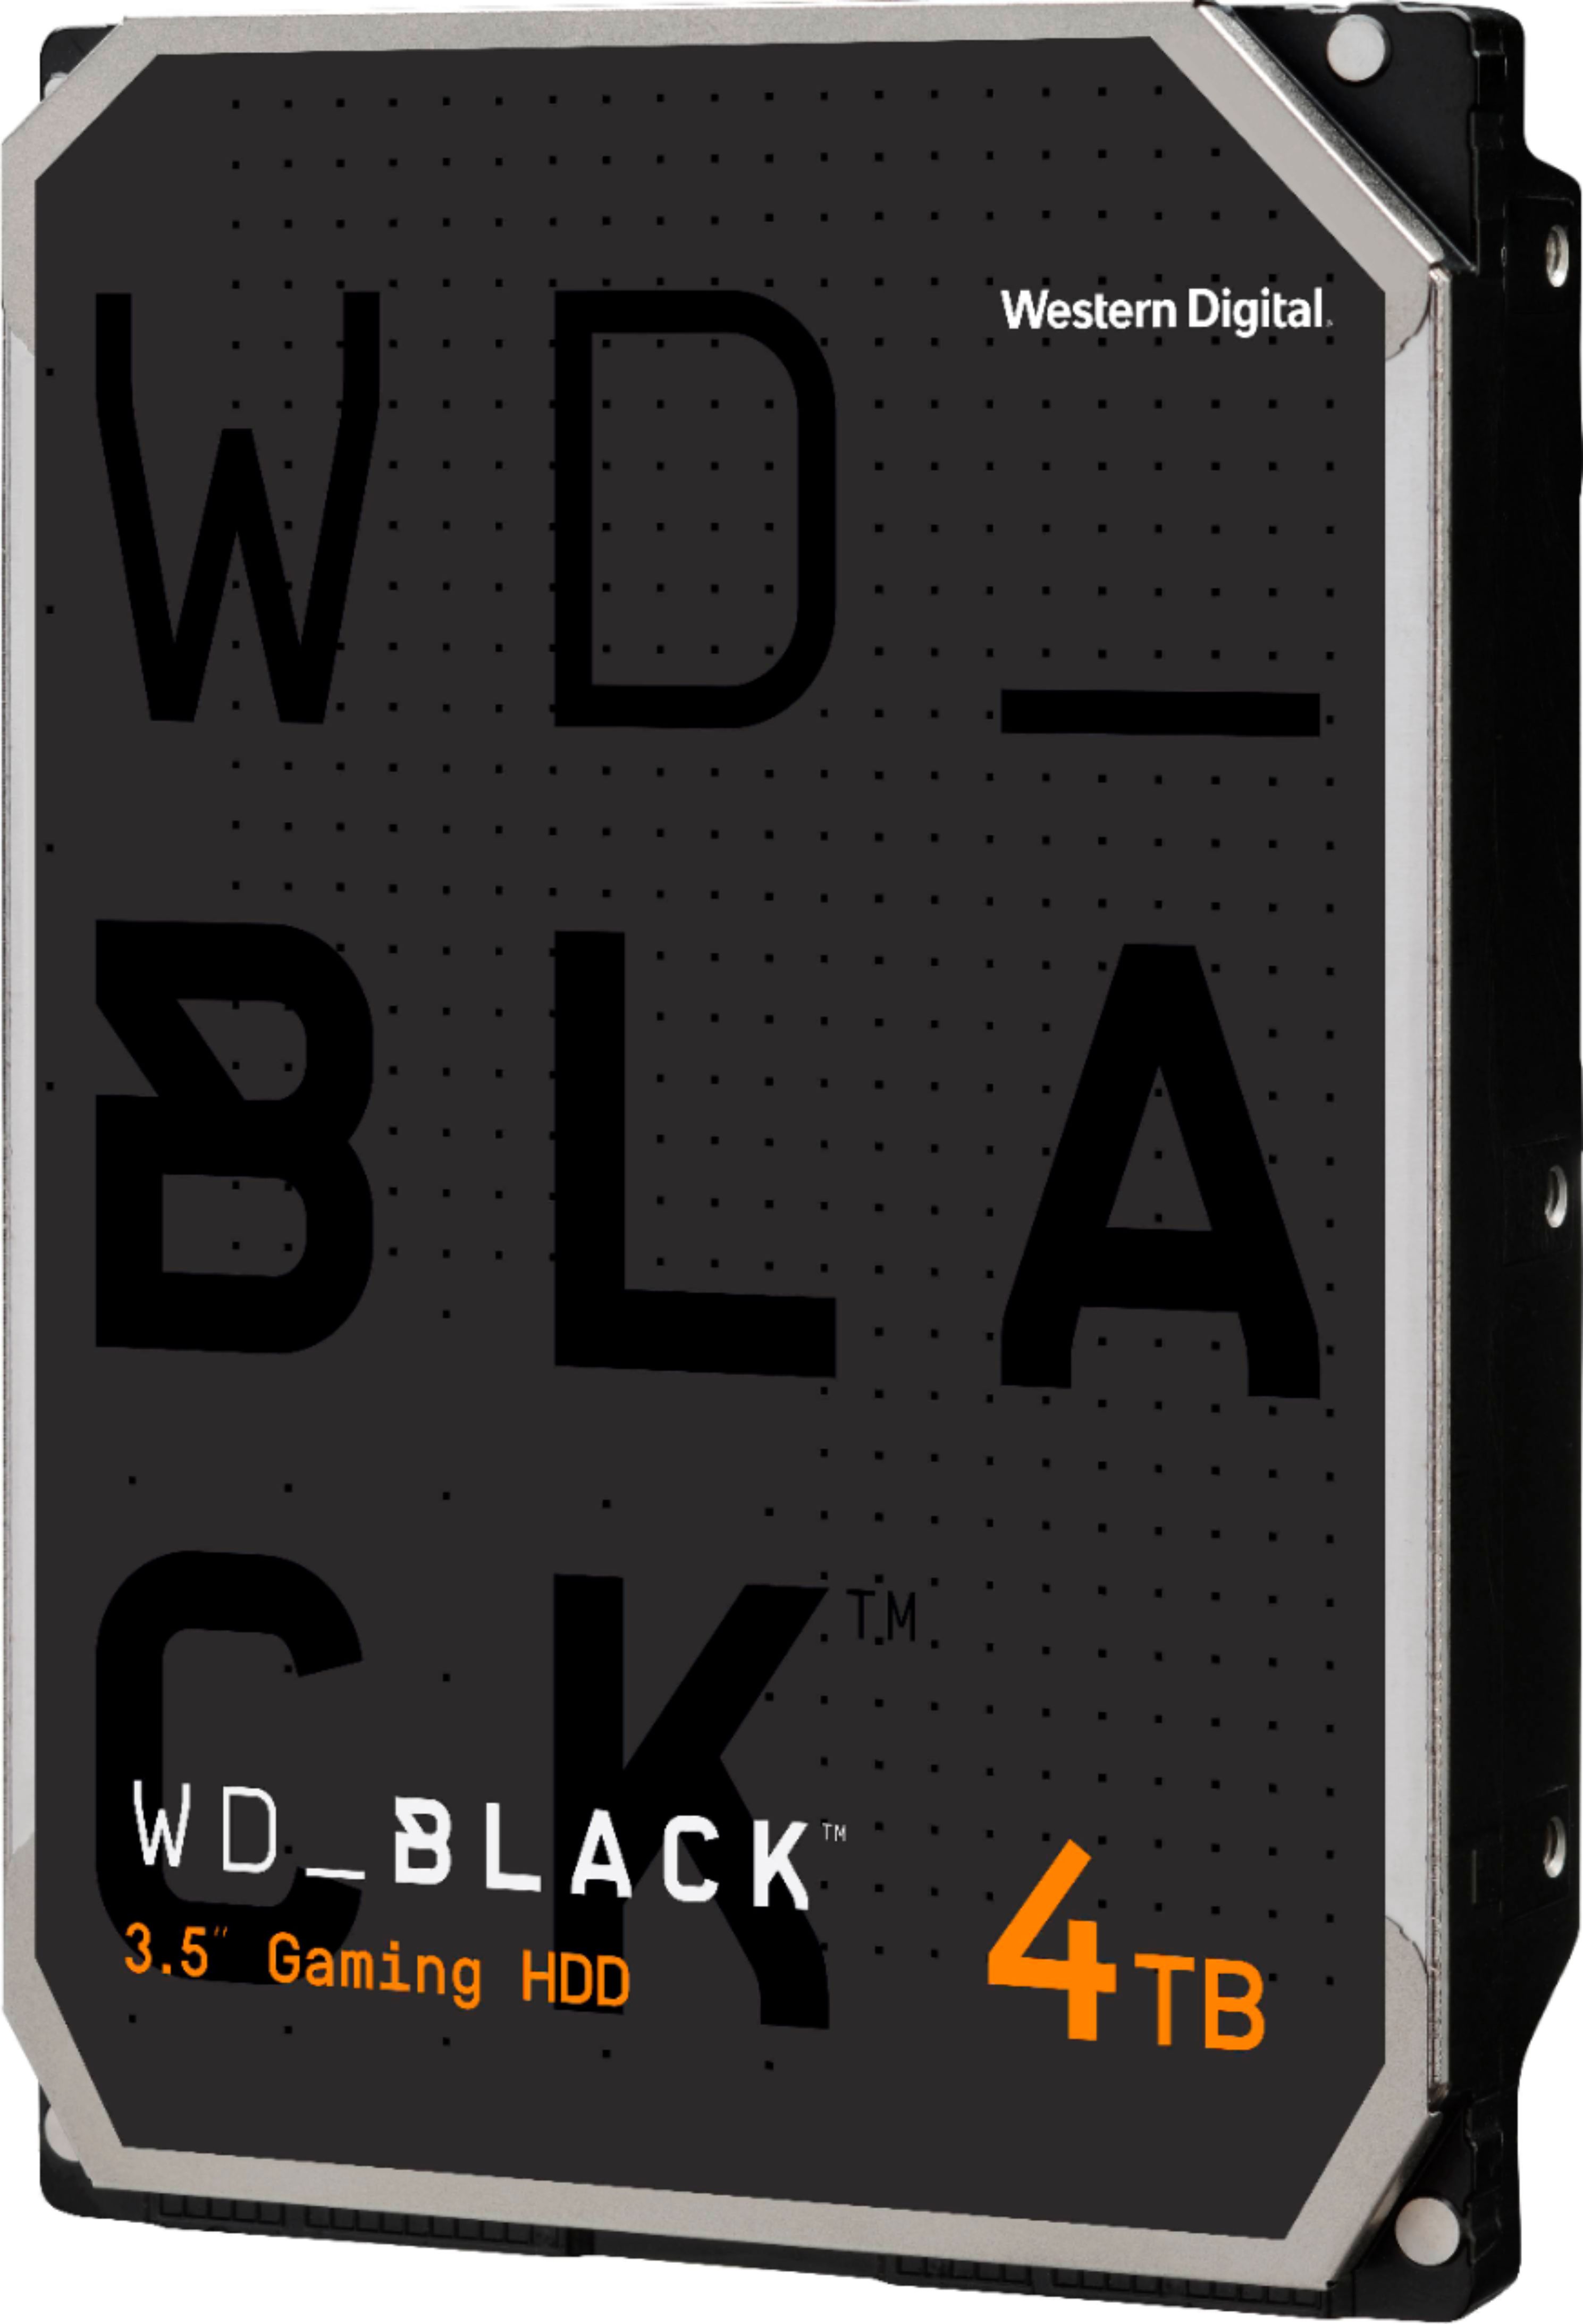 WD BLACK Gaming 4TB Internal SATA Hard Drive for Desktops 